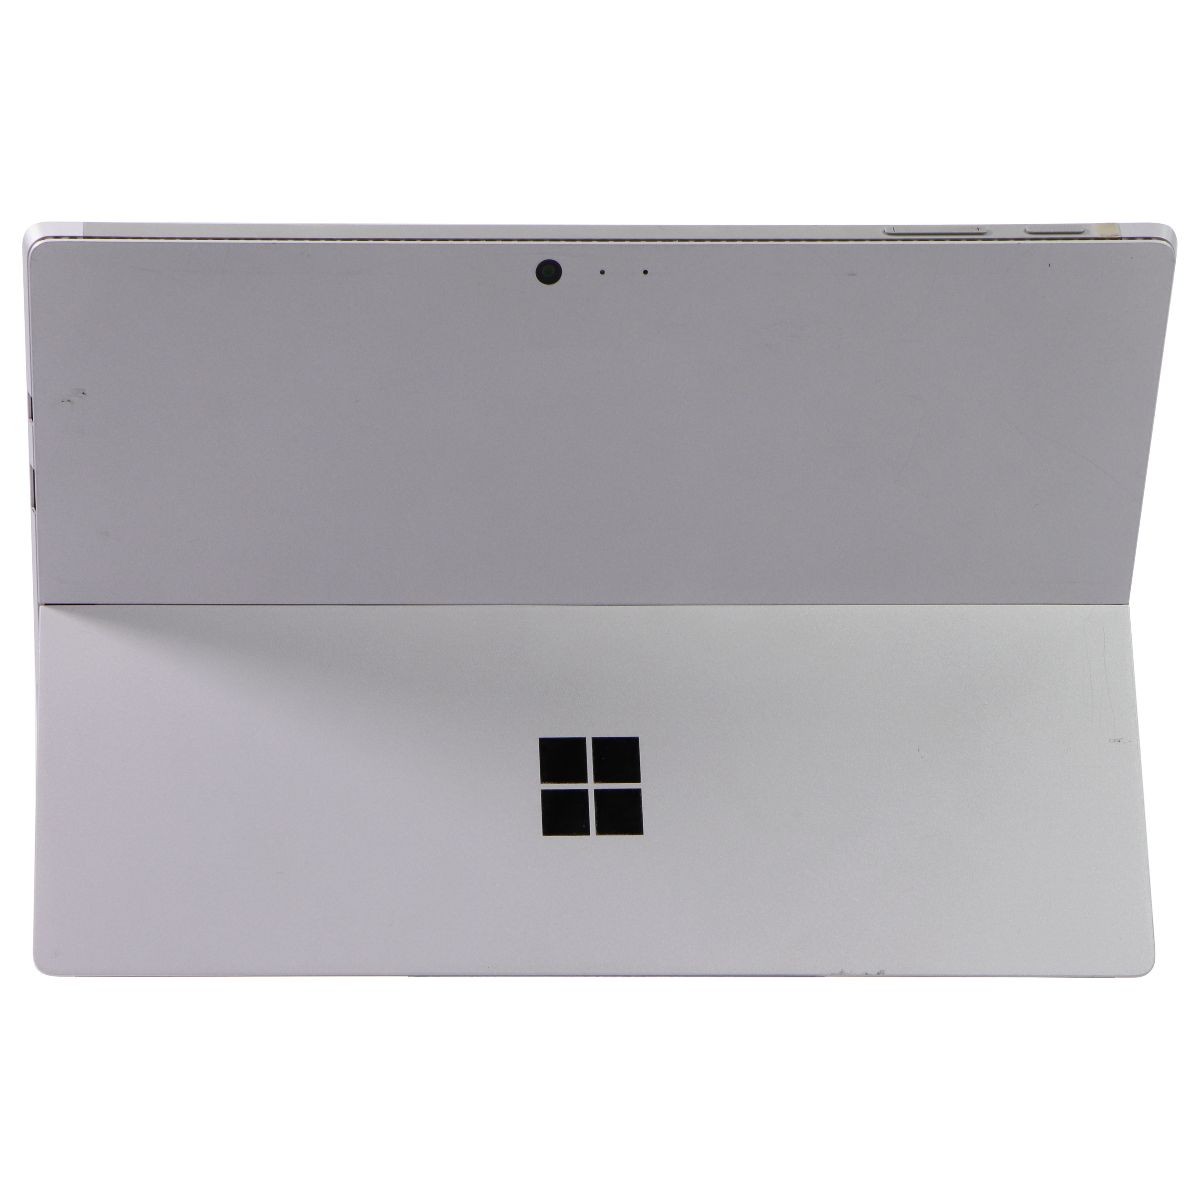 Microsoft Surface Pro 4 (12.3) Tablet (1724) i7-6650U/256GB/8GB/10 Pro - Silver Laptops - PC Laptops & Netbooks Microsoft    - Simple Cell Bulk Wholesale Pricing - USA Seller